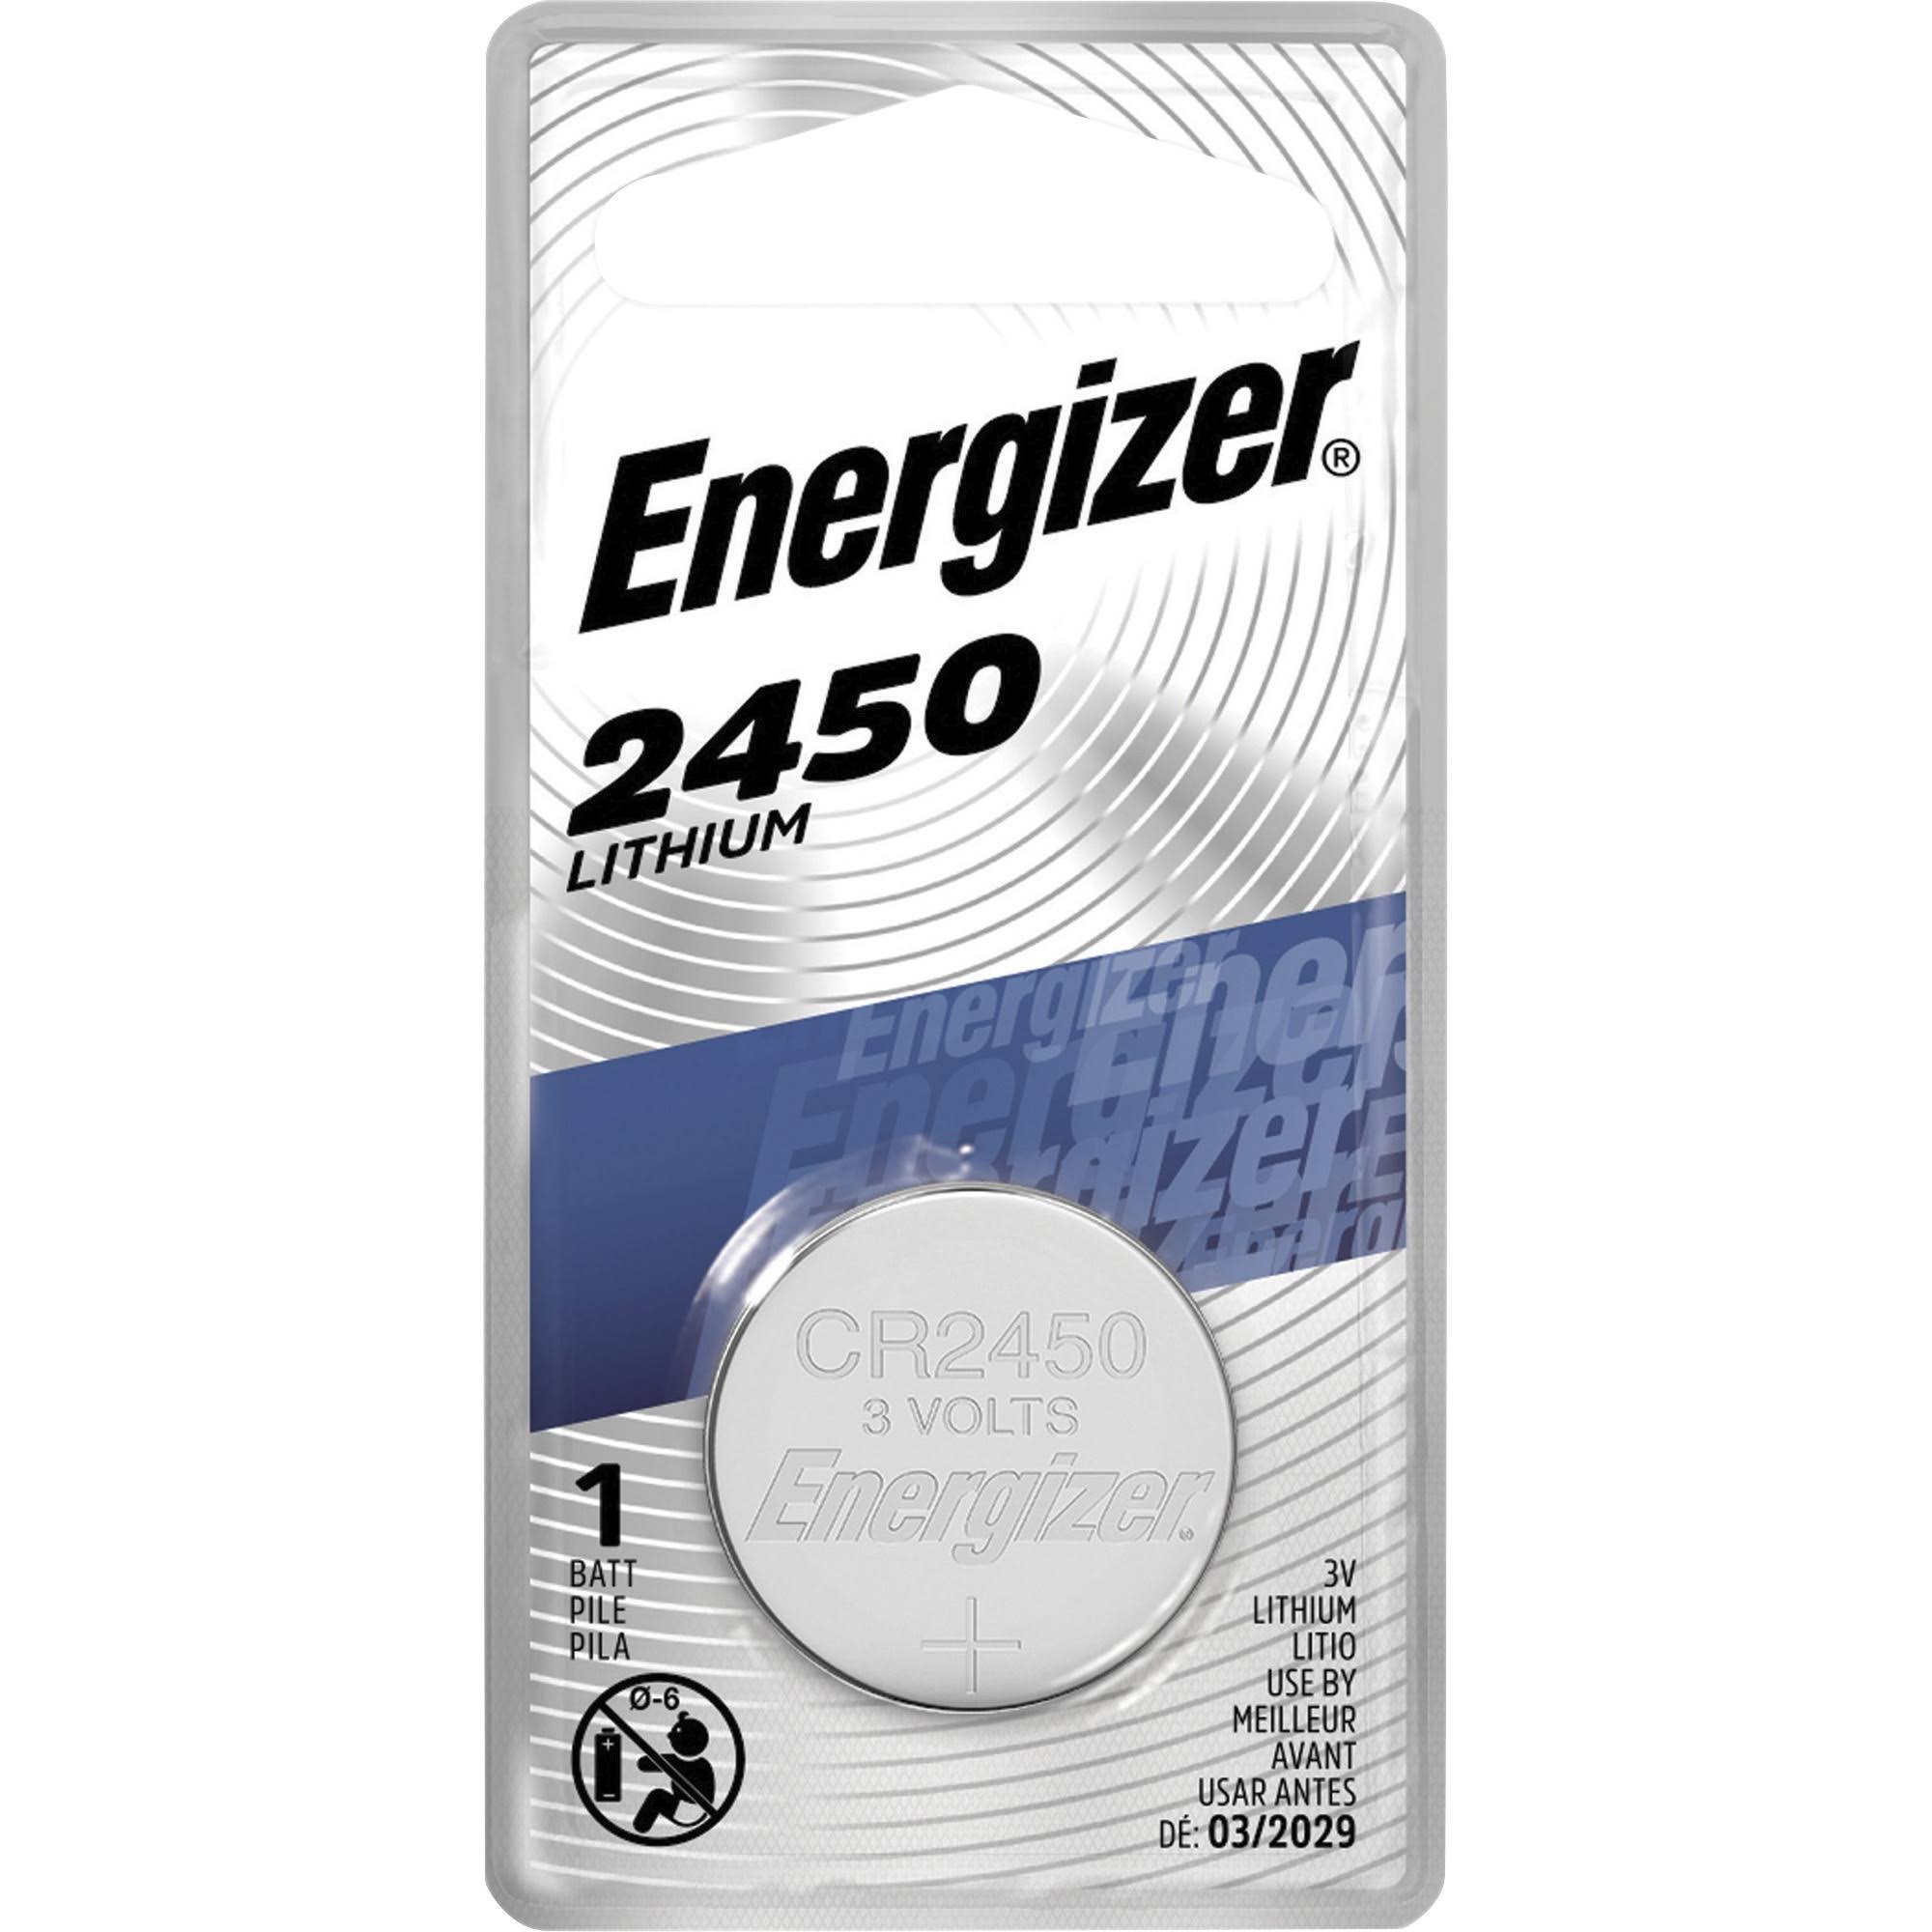 Energizer 2450 Lithium Battery - 3V